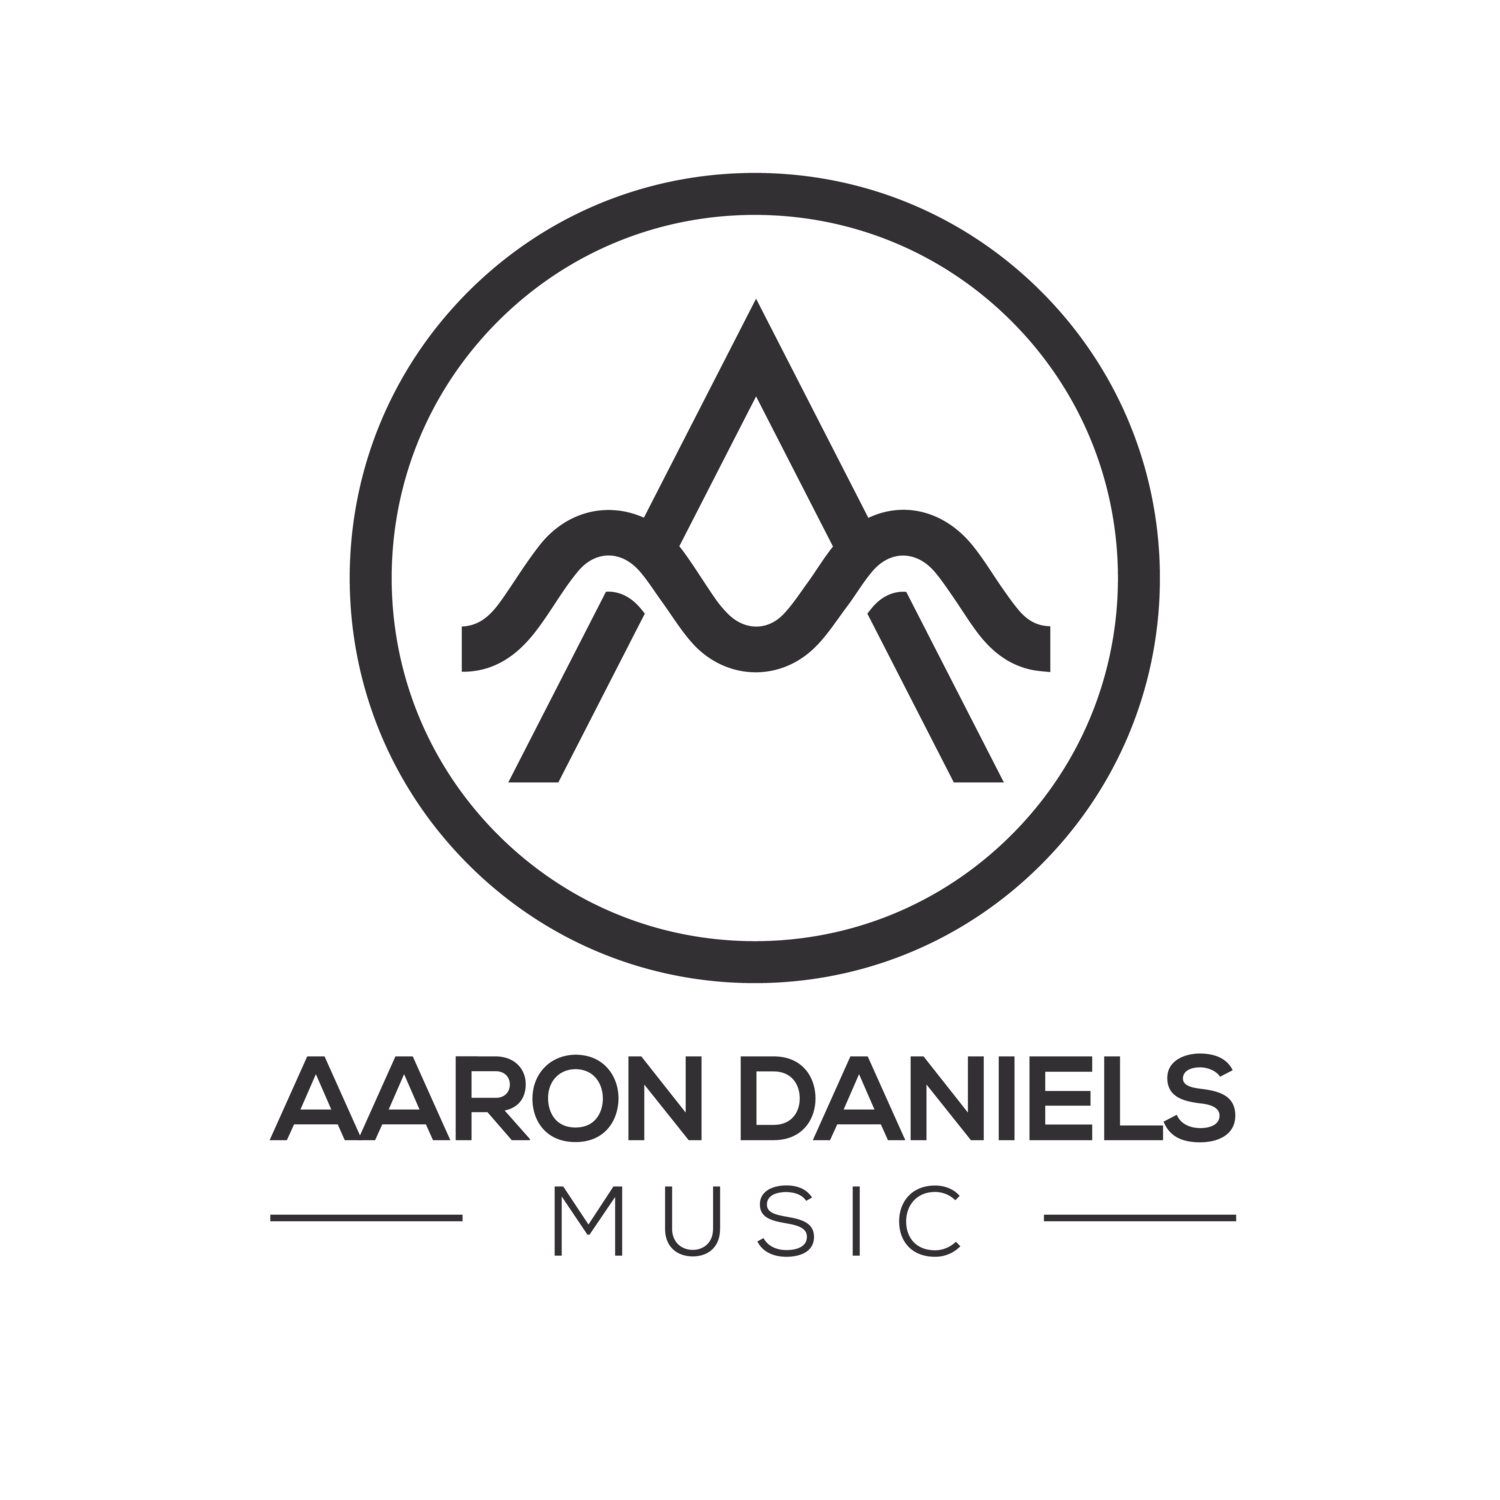 Aaron Daniels Music